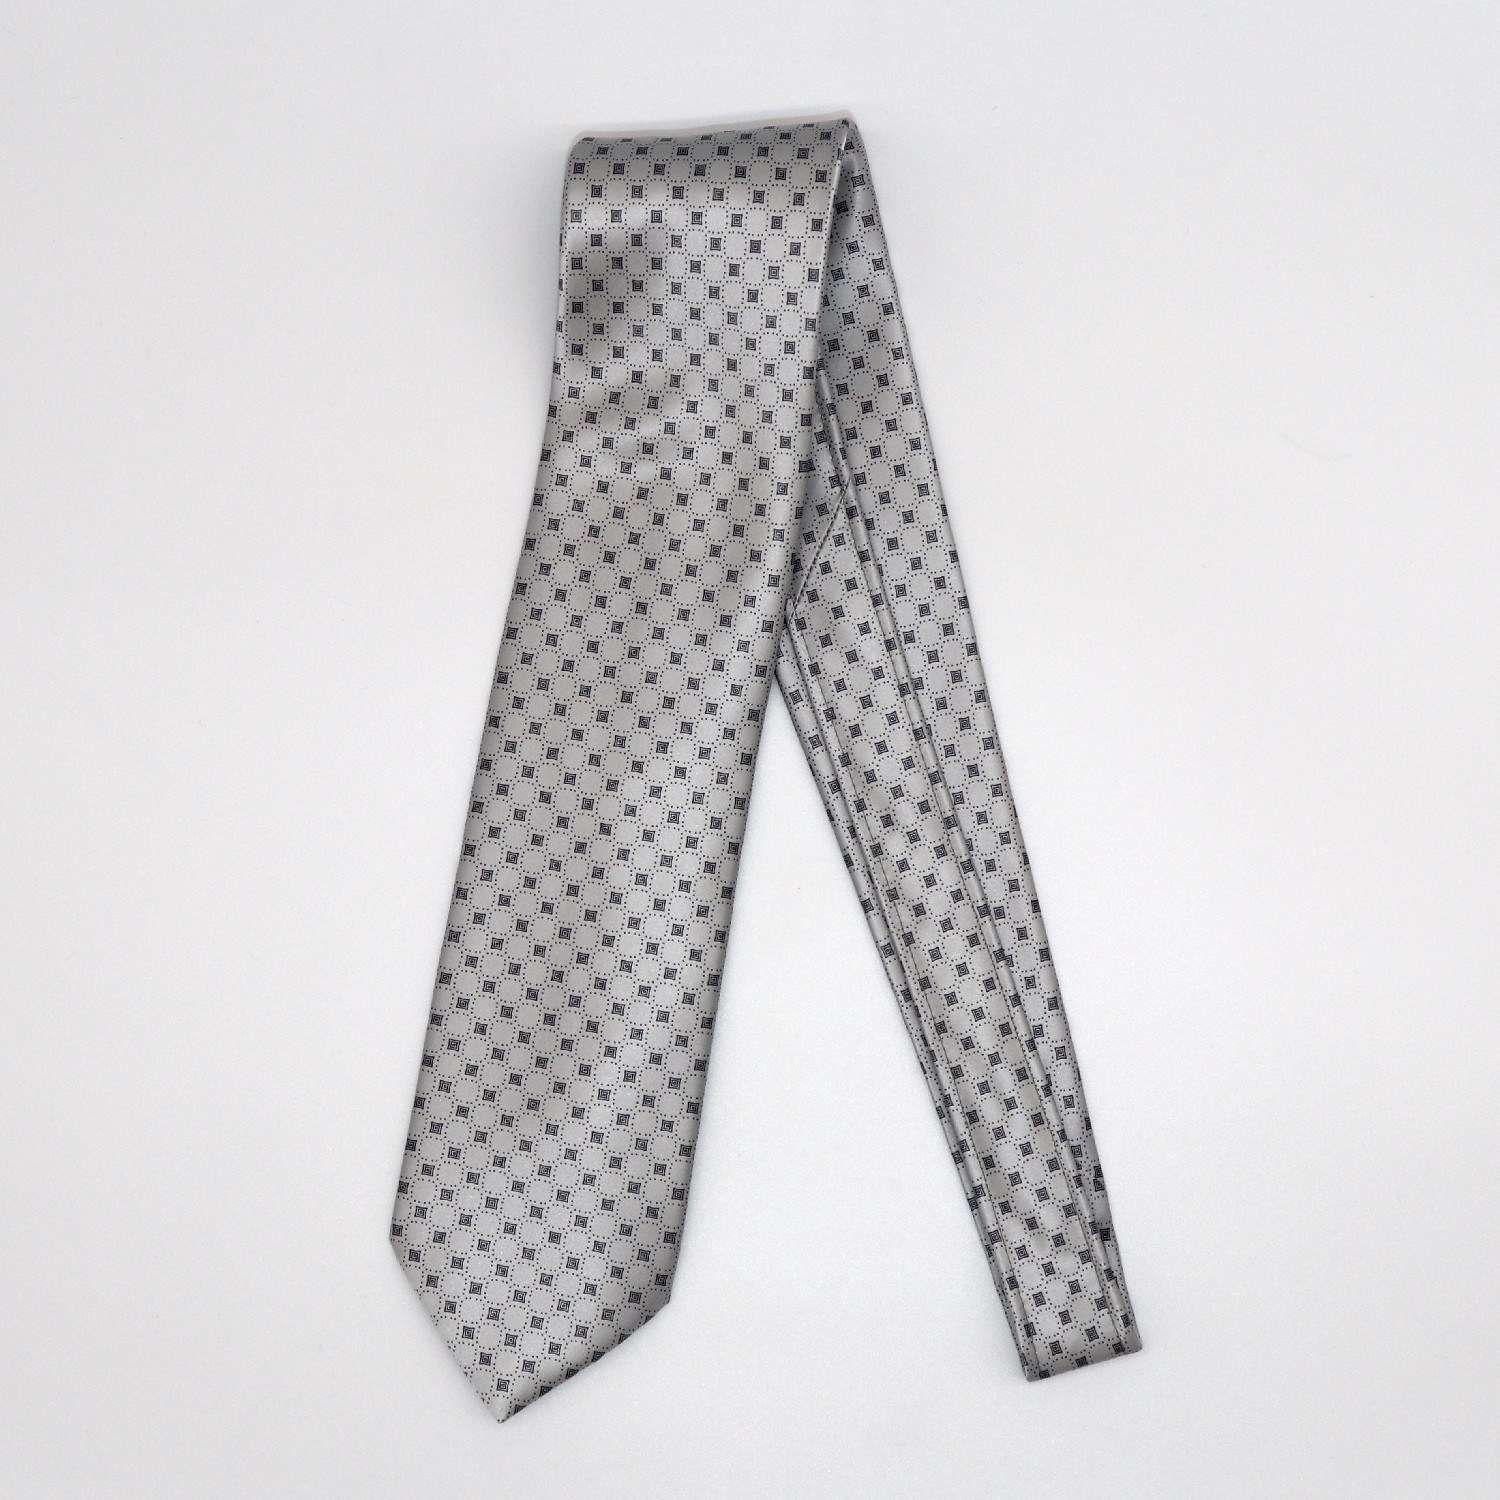 Authentic Gucci 100% Silk Designer Geometric Print Red Neck Tie